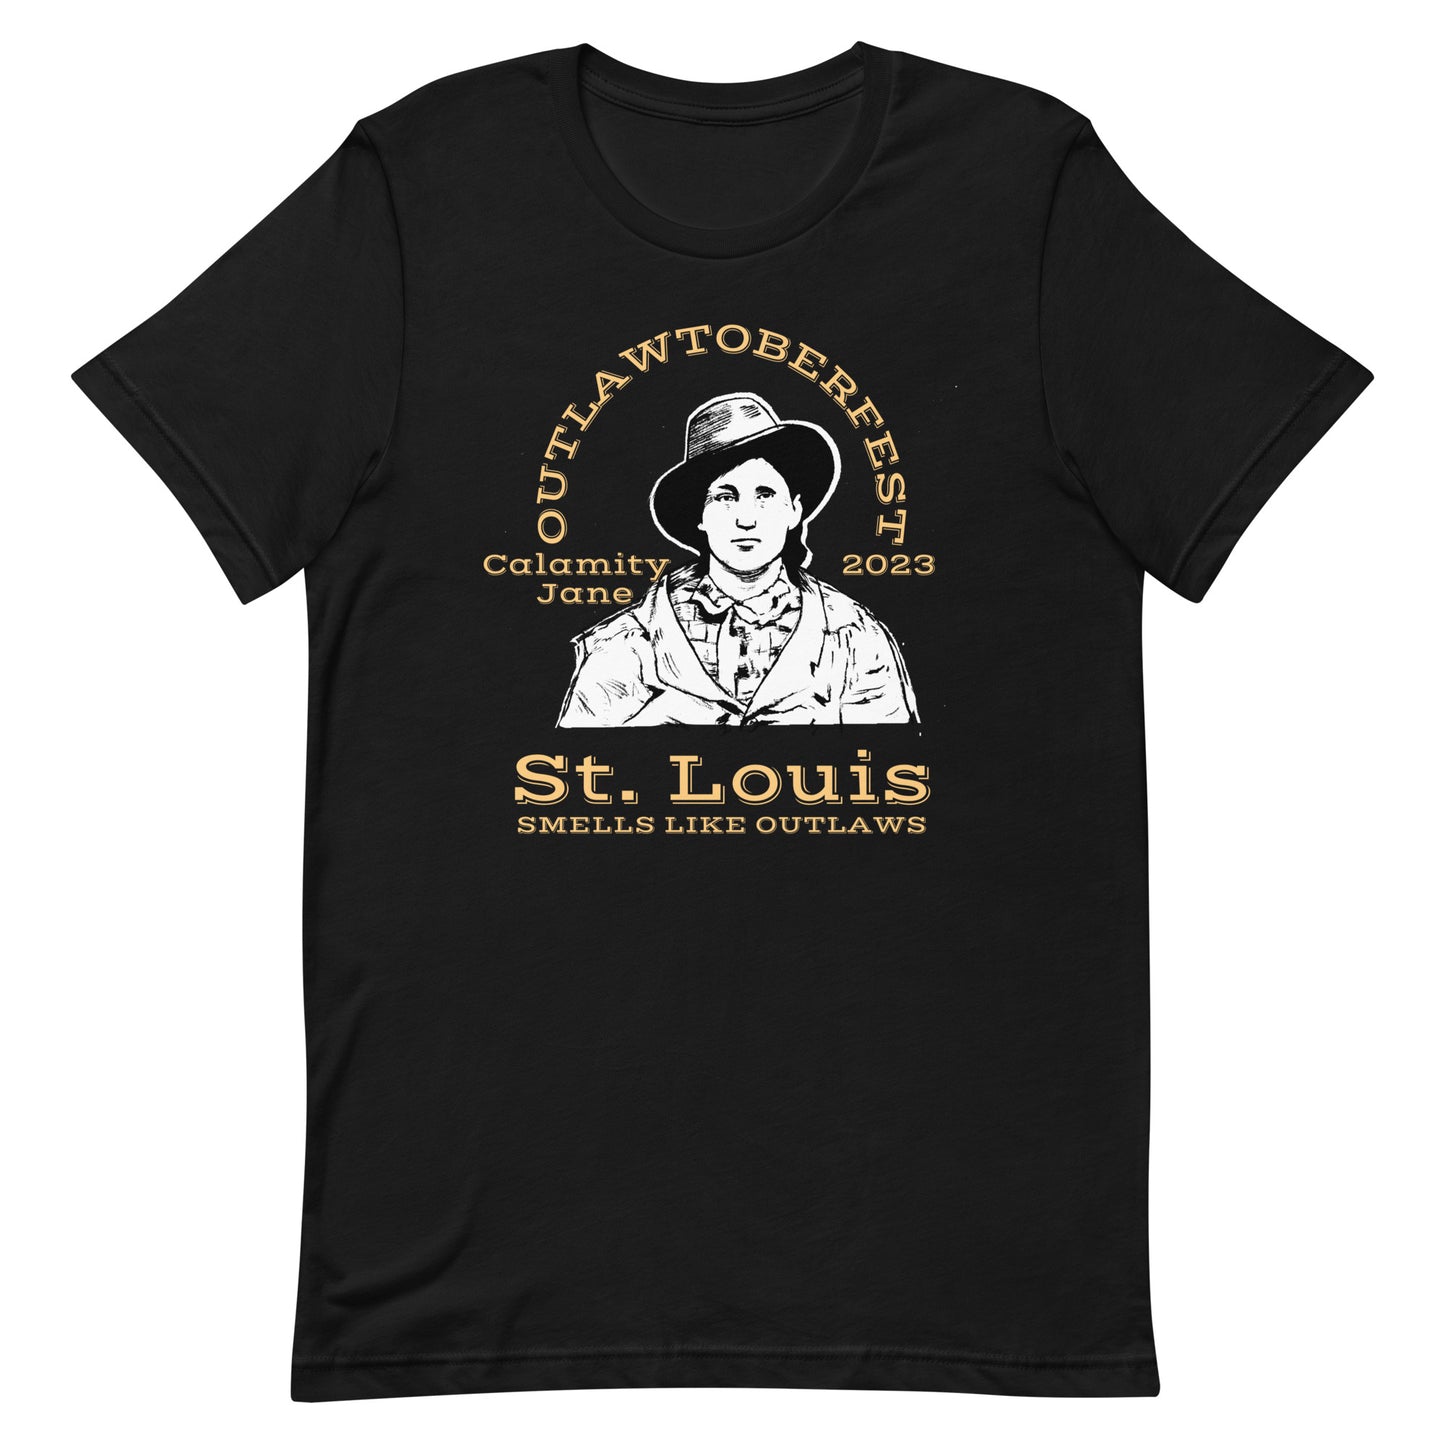 St. Louis T-Shirt - Outlawtoberfest 2023 - Smells like Outlaws Tour T-Shirt